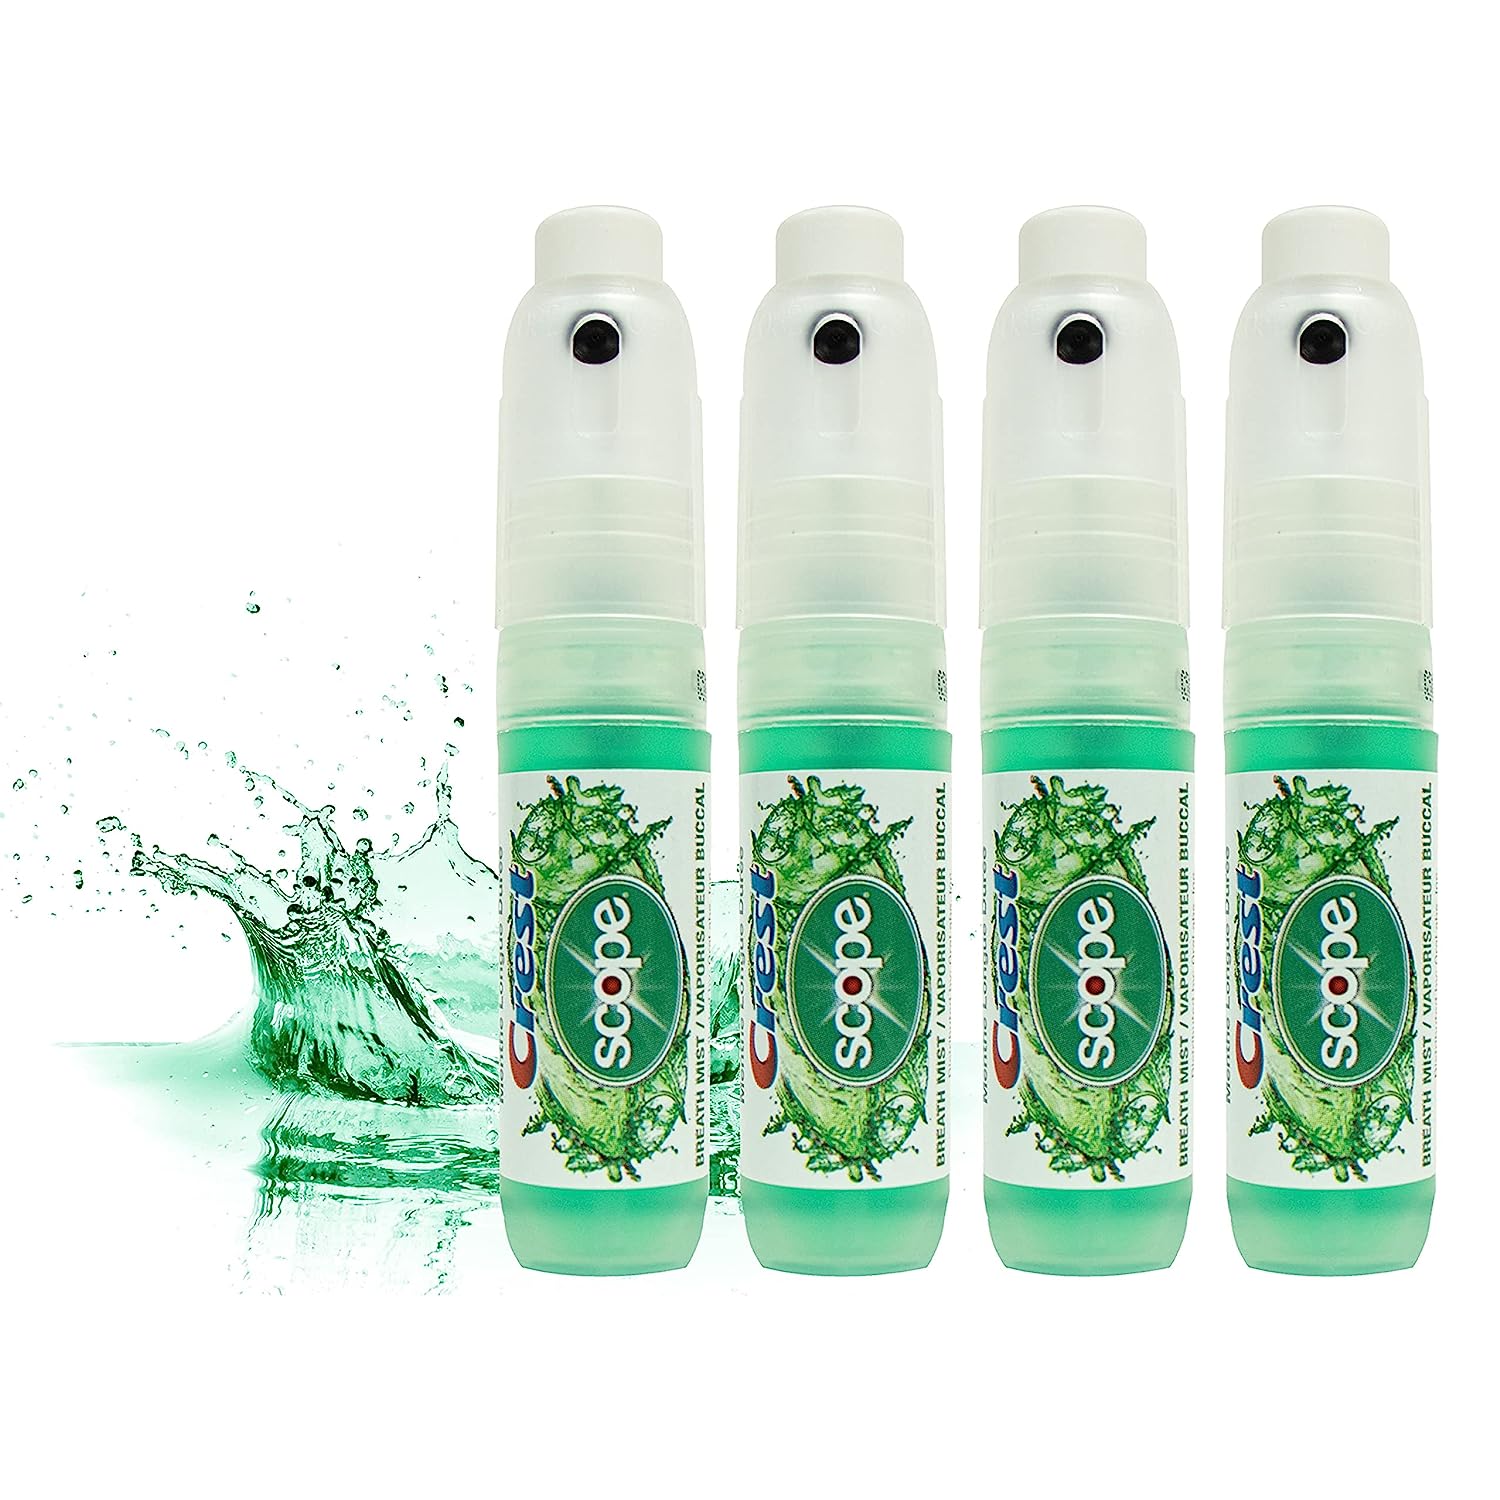 Crest Scope | One 4-Pack of Mint Breath Mist Sprays (4 [...]